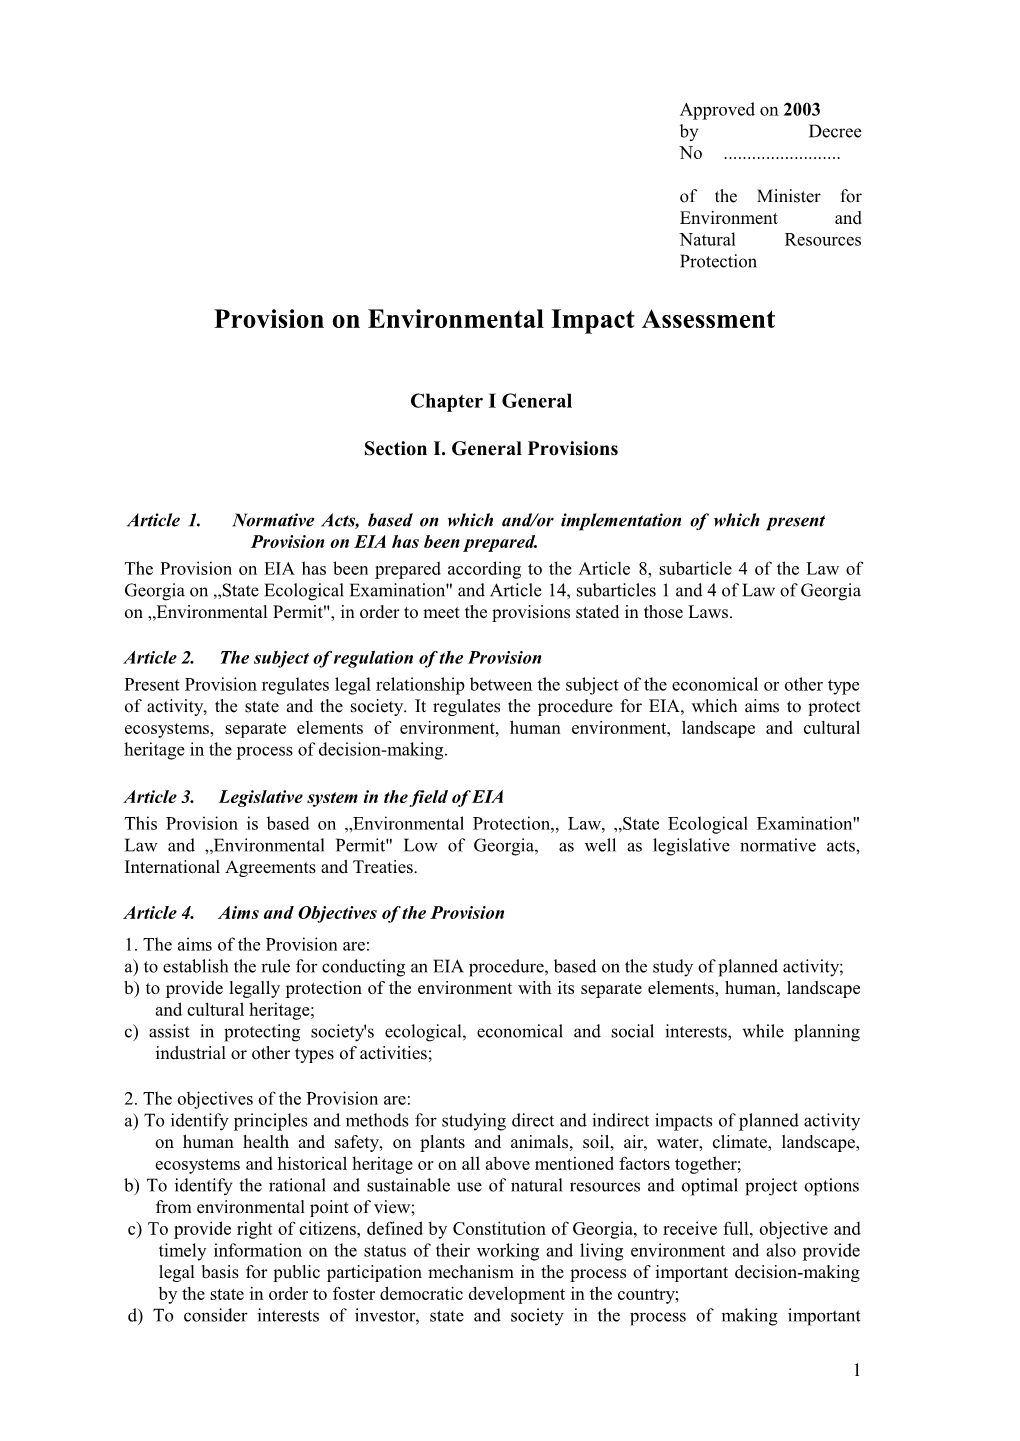 Provision on Environmental Impact Assessment